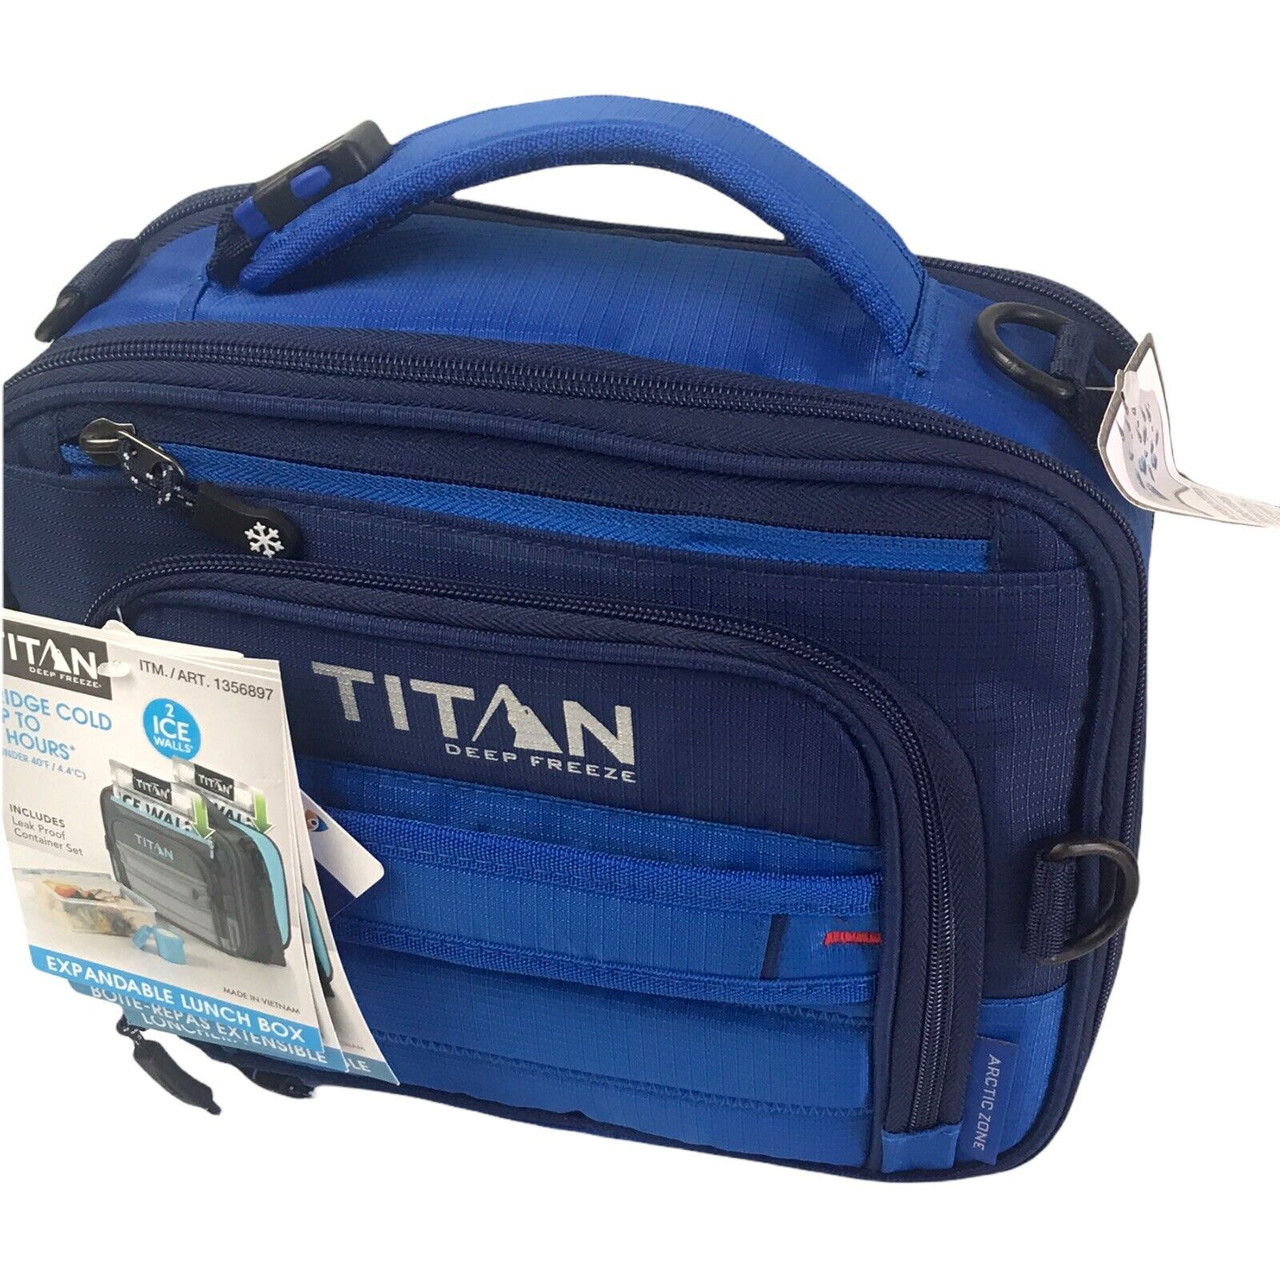 TITAN Deep Freeze Fridge Cold 6 hrs Expandable Lunch Box Bag 2 Ice Walls -  Blue